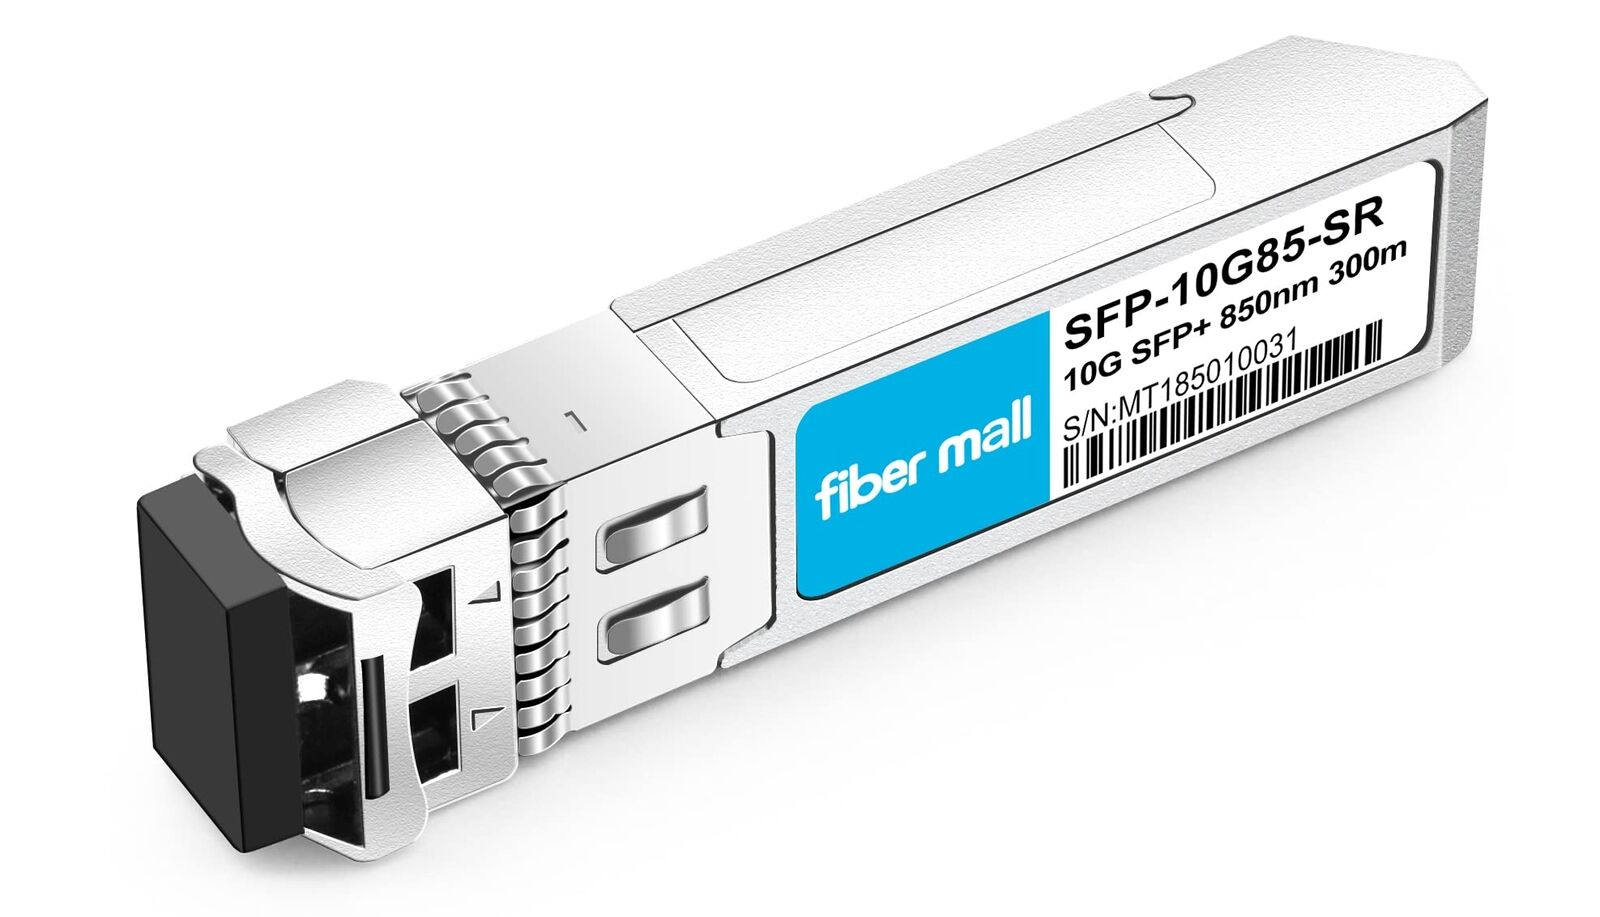 SFP 10G SR for Cisco Meraki MA-SFP-10GB-SR 10GBASE-SR SFP+ 850nm 300m MMF DOM...